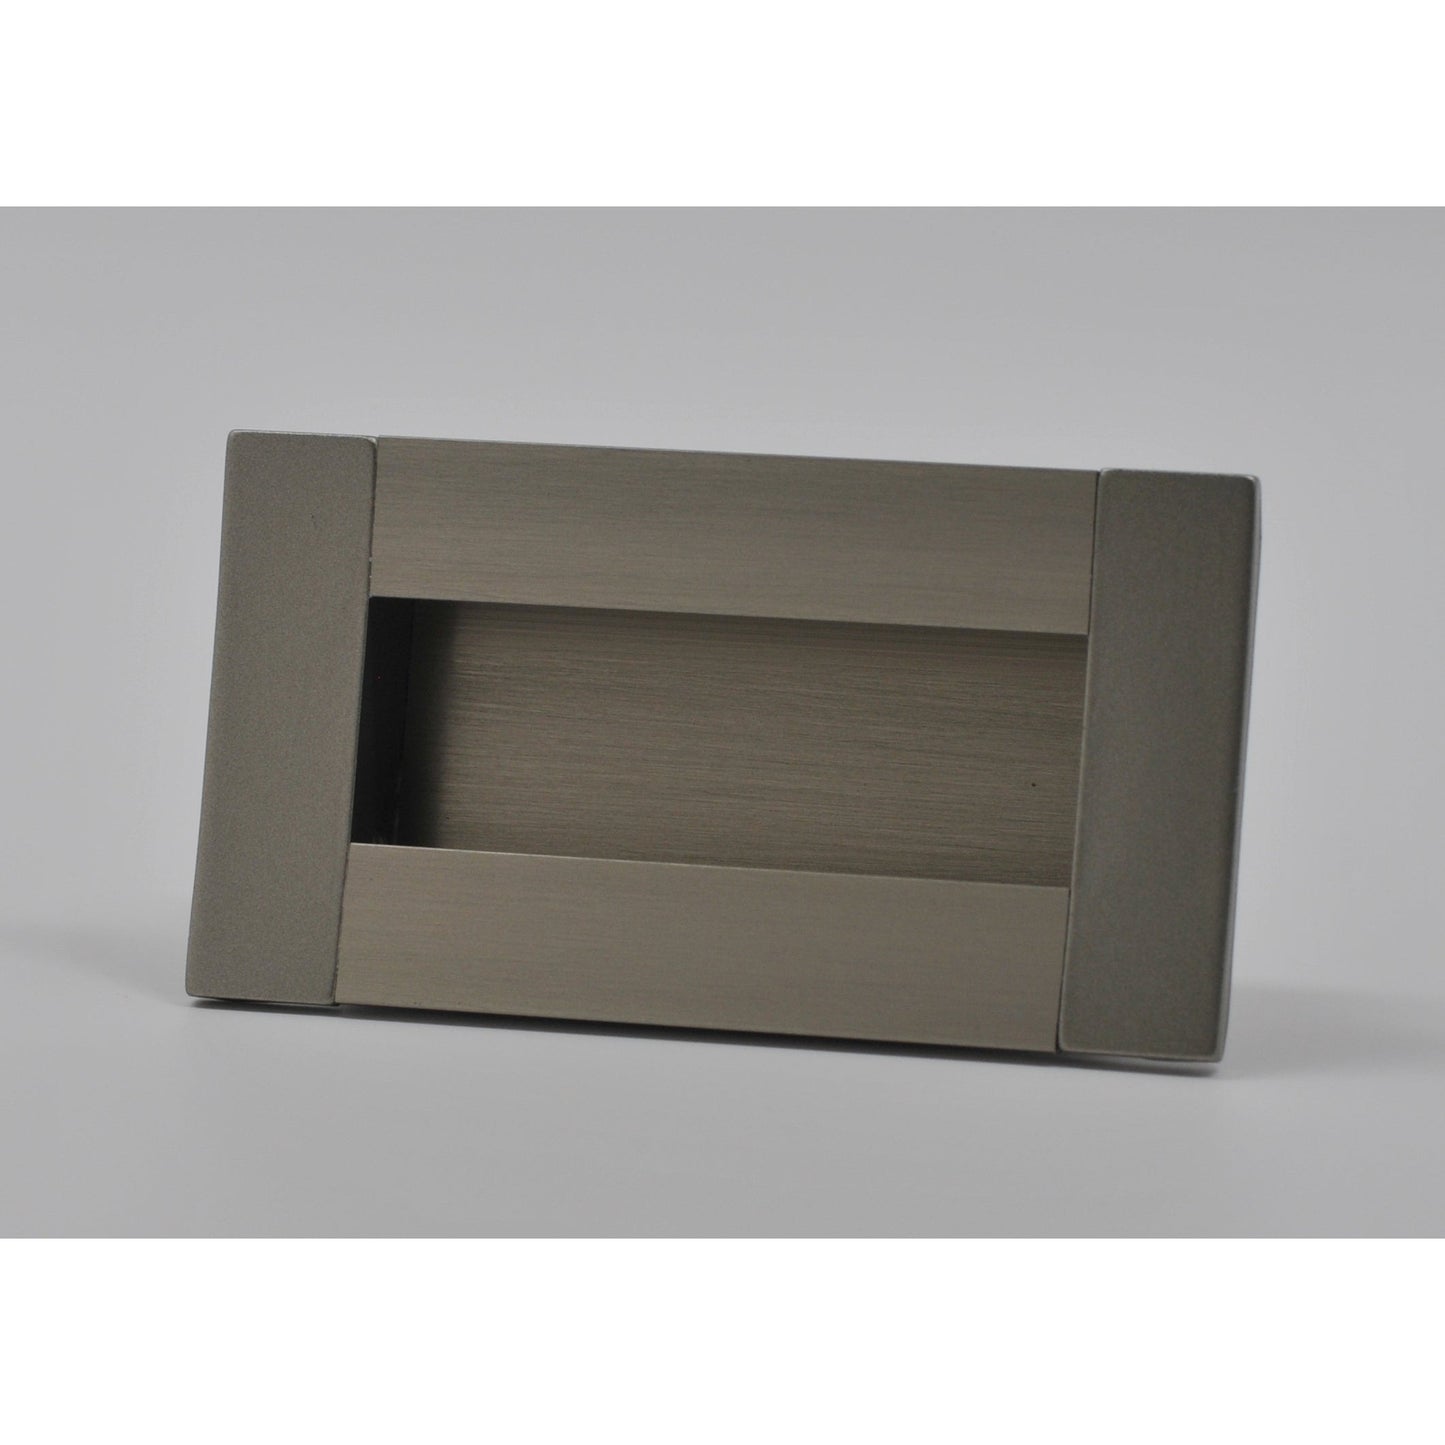 ZEN Design Smart 3" Stainless Steel Center Cabinet Handle